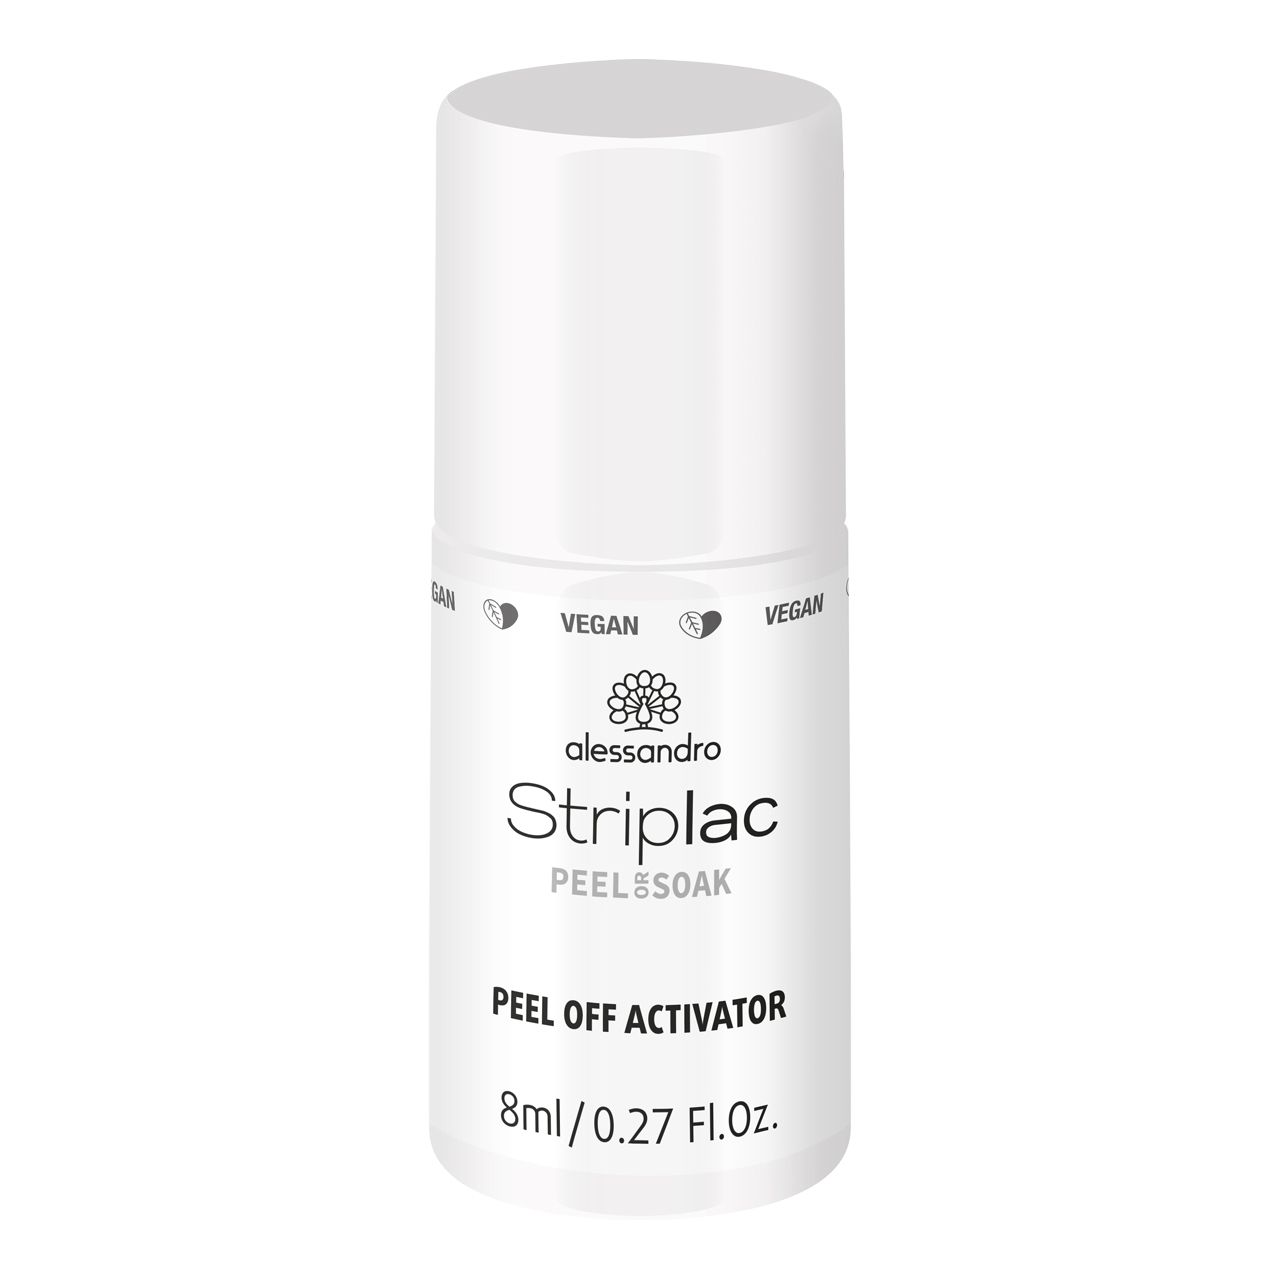 Alessandro Striplac Peel or Soak Peel Off Activator 8ml